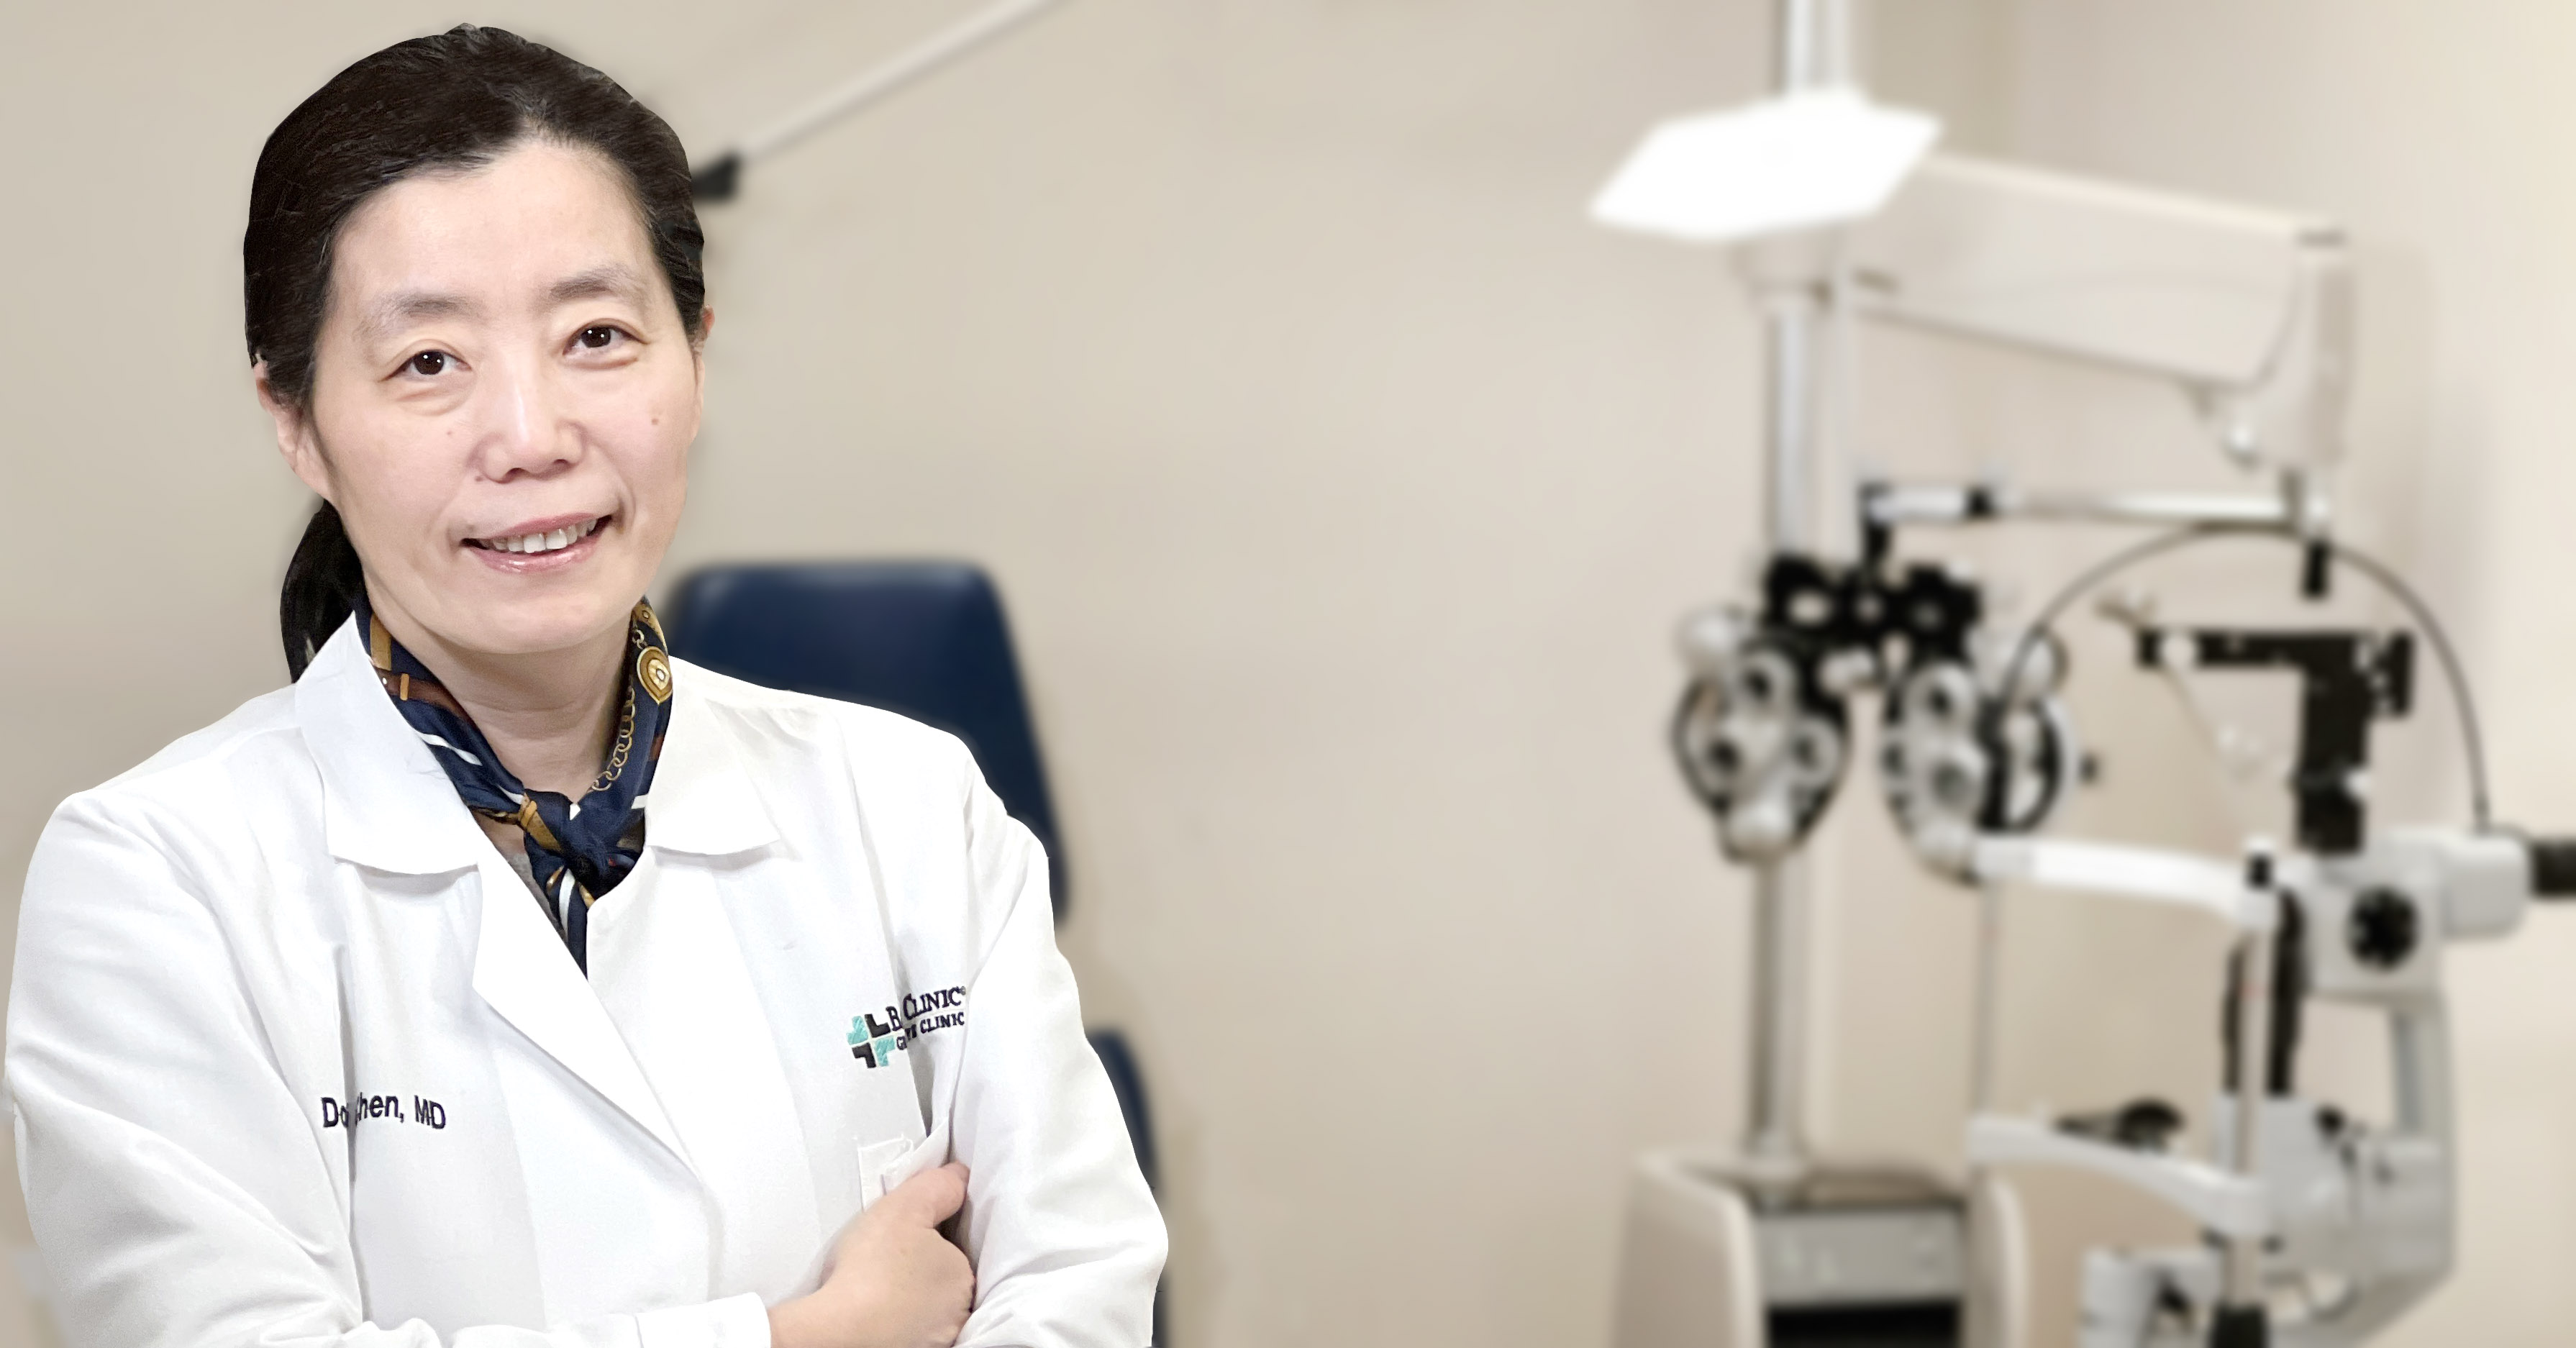 Dr. Chen in eye exam room